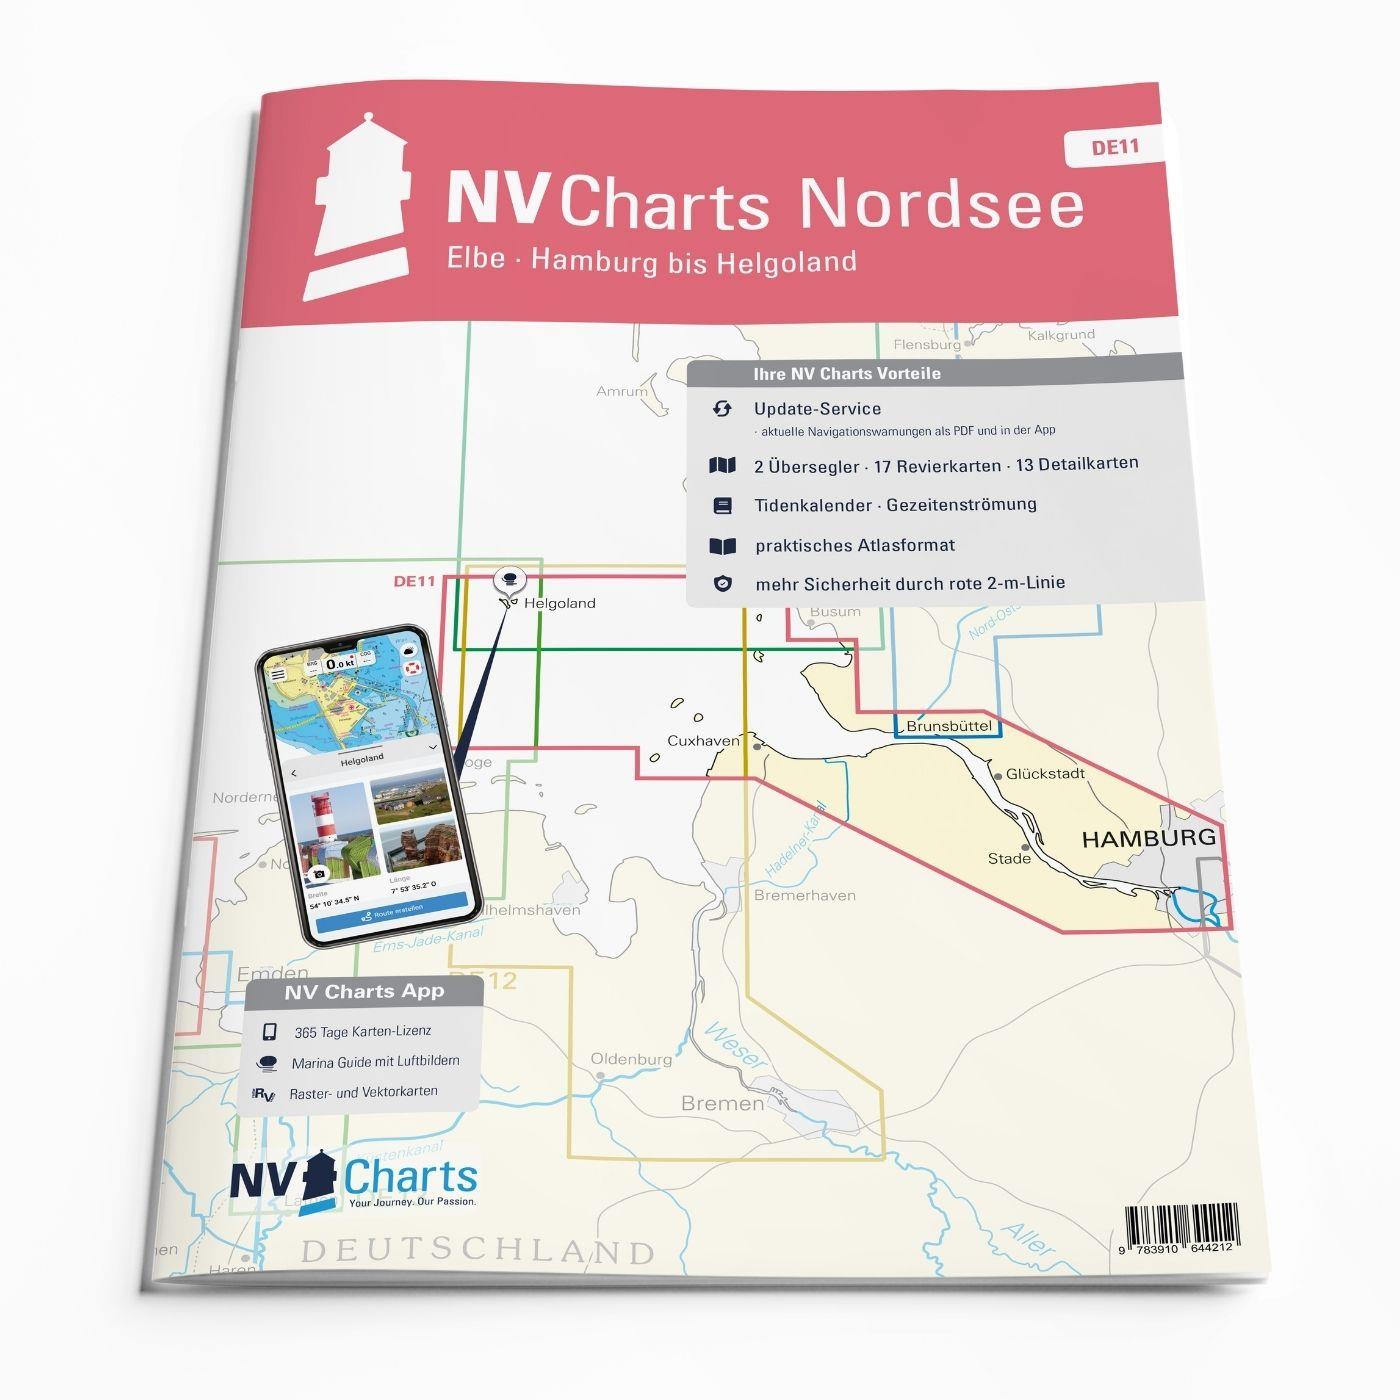 NV Charts Nordsee DE11 - Elbe, Hamburg bis Helgoland